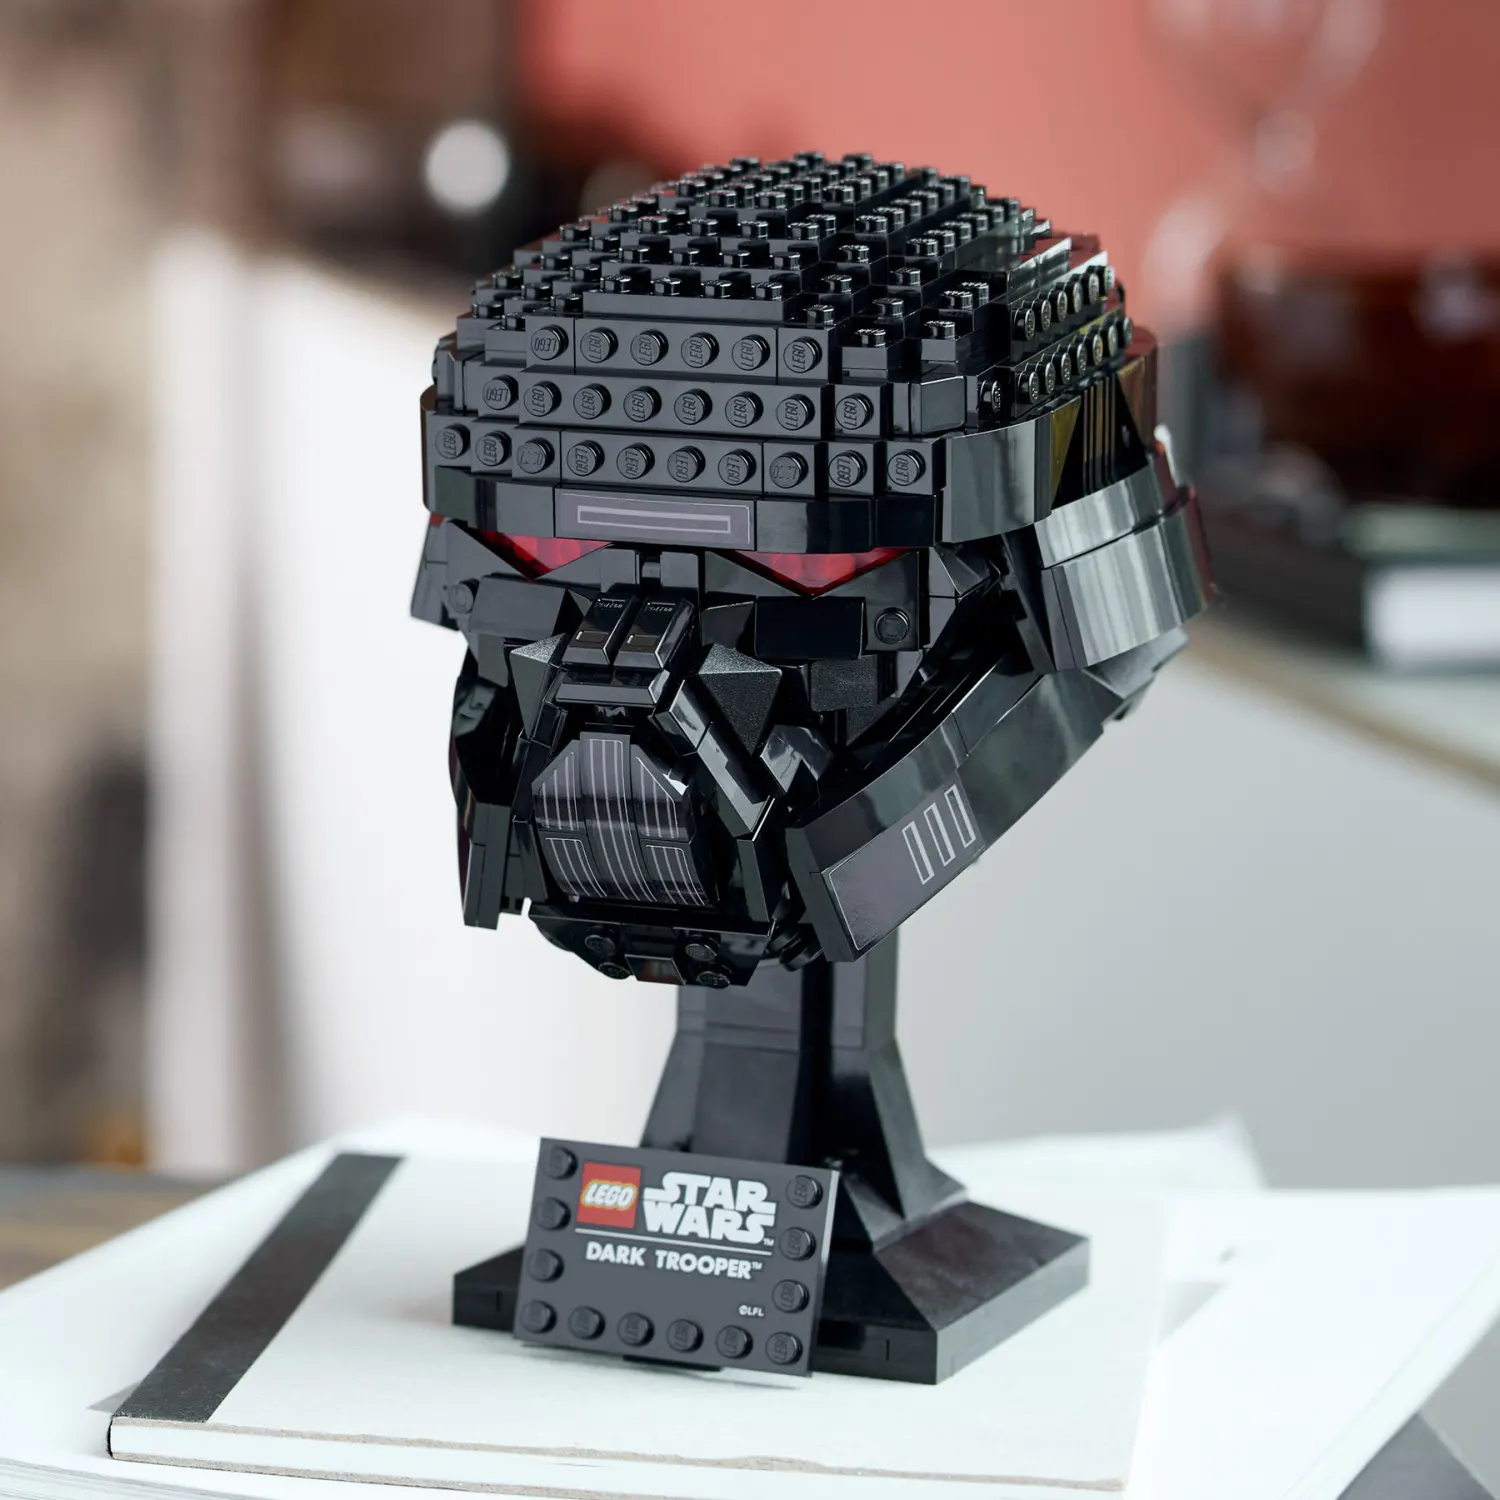 LEGO Star Wars Luke and Mandalorian Helmets Revealed | New set for March 1st 2022